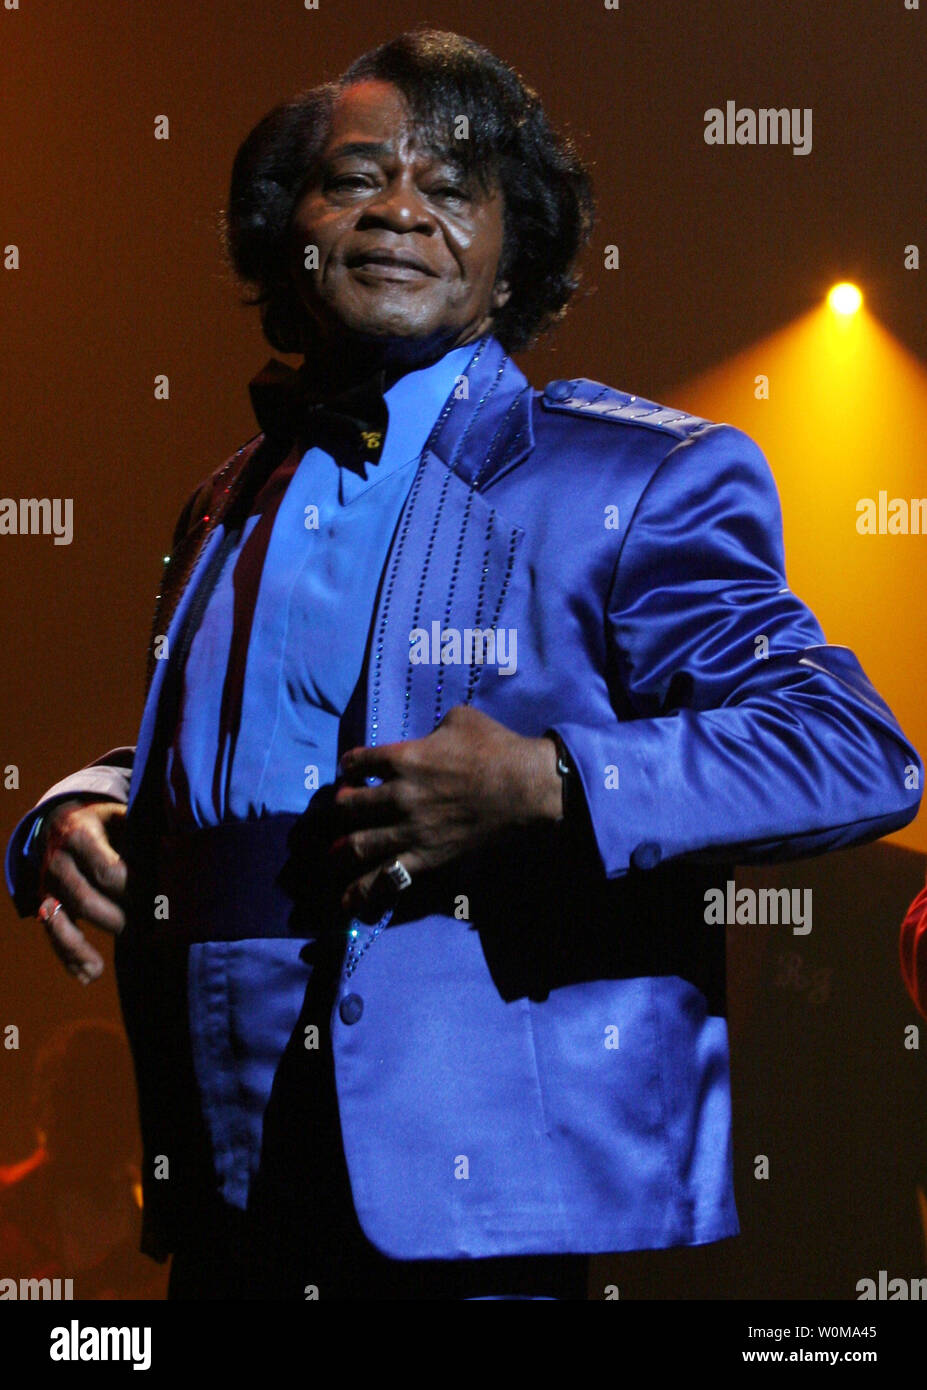 Legendary soul/funk artist James Brown, seen in this June 29, 2006 file ...